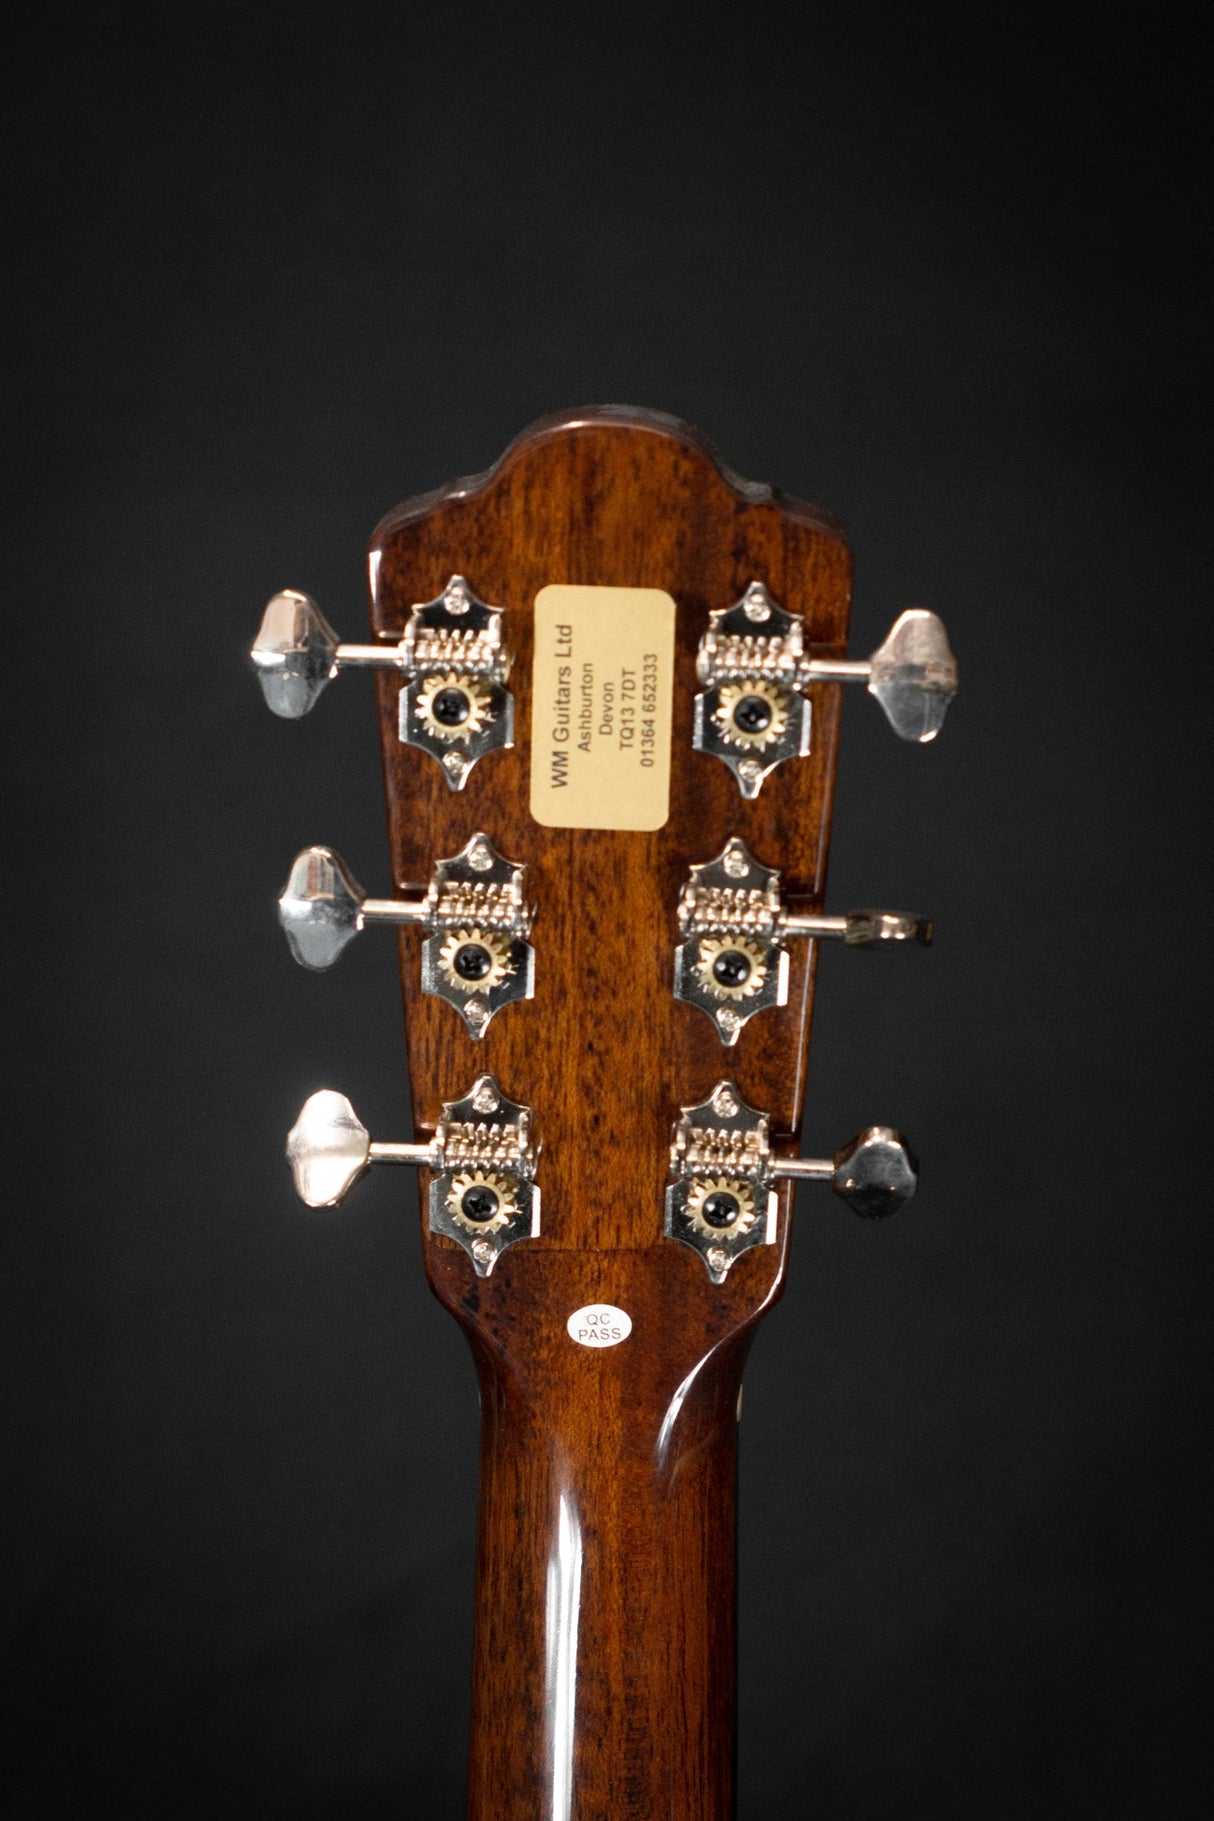 Rathbone R3-SRCELH Electro Acoustic Guitar (Spruce Top) - Acoustic Guitars - Rathbone